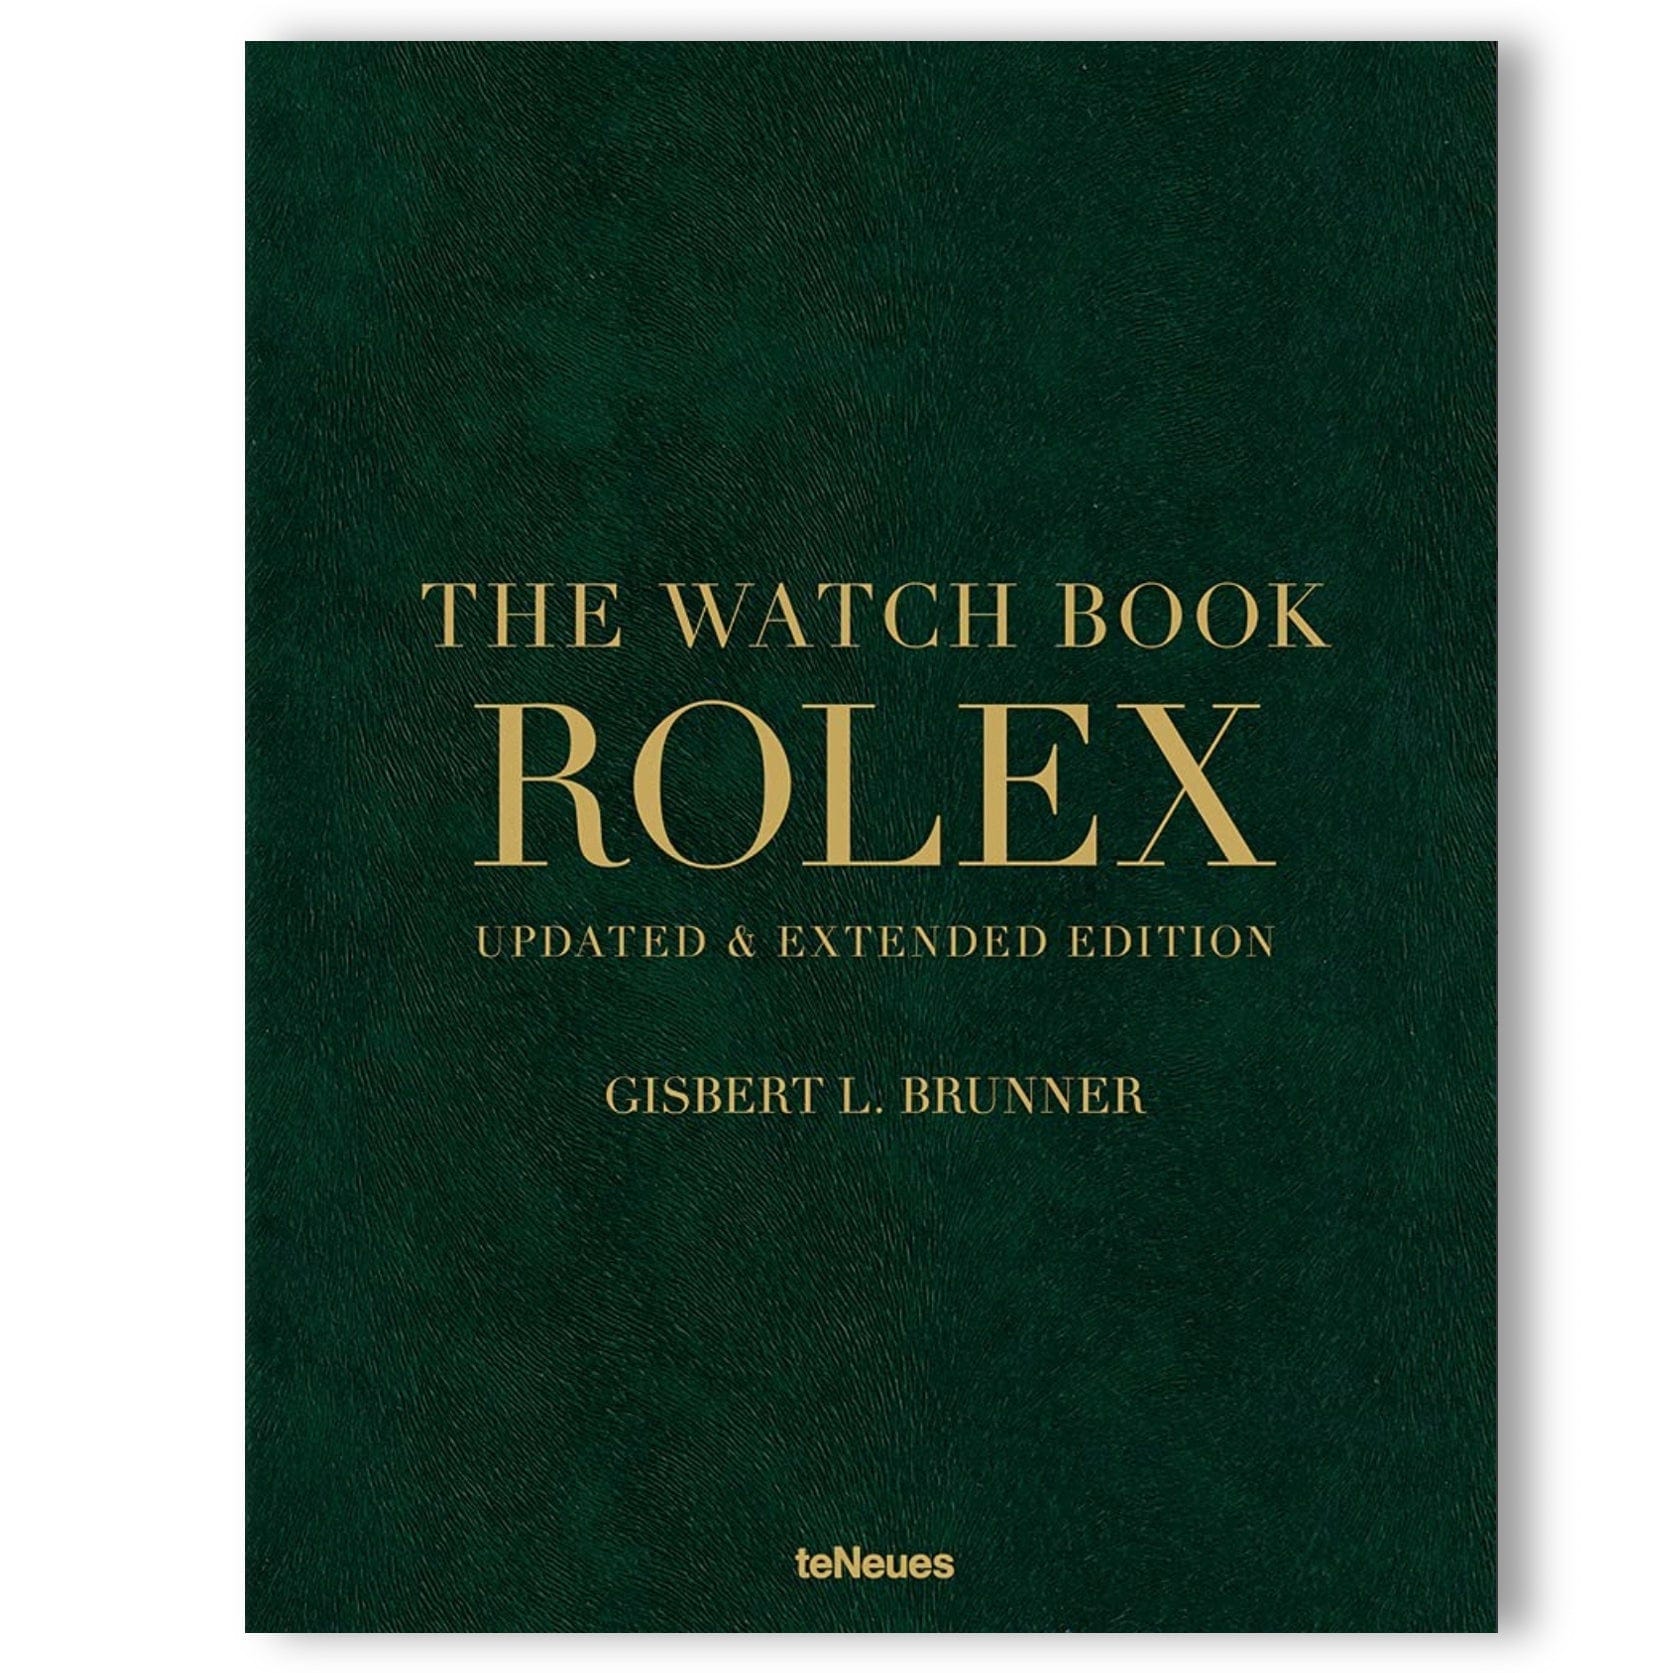 Hintsdeco Books Βιβλίο Τέχνης Βιβλίο Τέχνης, Gentlemen, The Watch Book Rolex - New Edt., Σκούρο Πράσινο, 25,5×3,2×32 cm, Hintsdeco